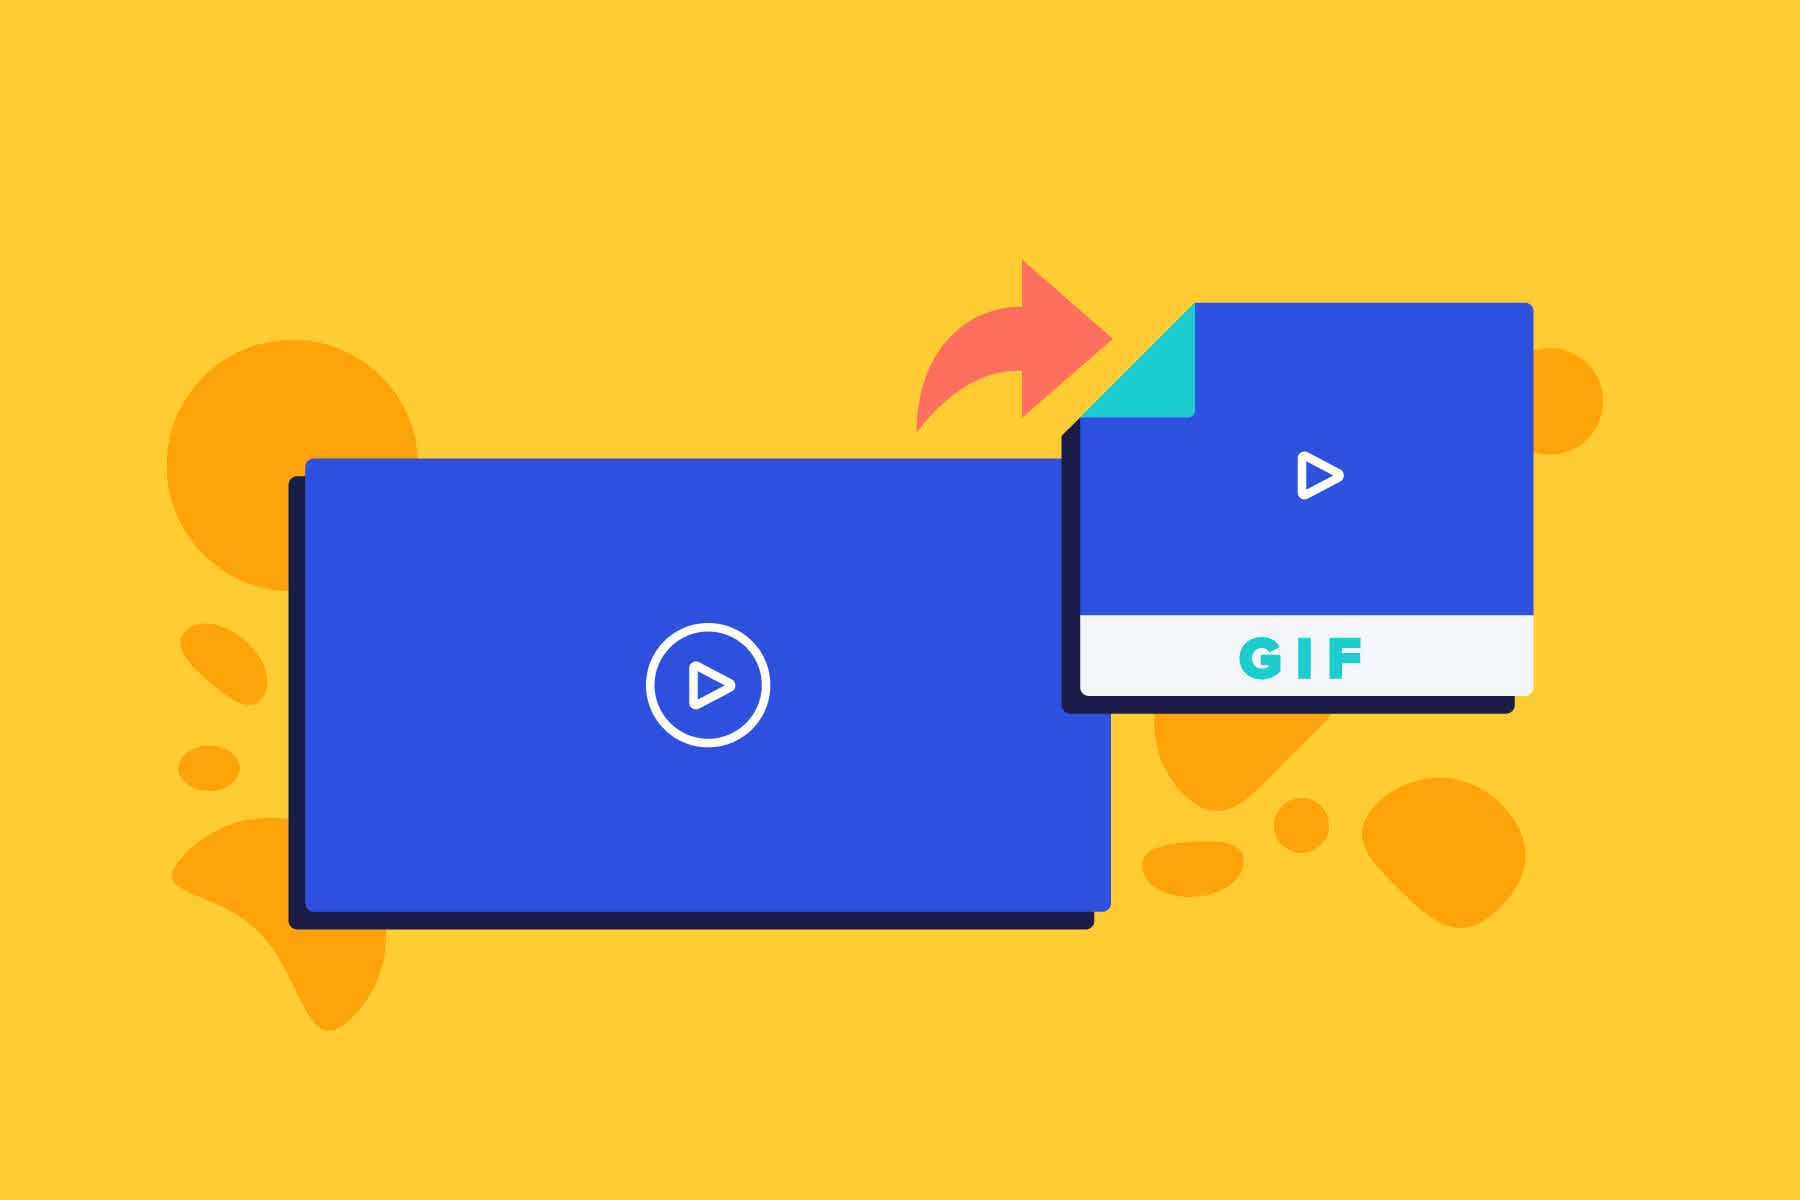 Animated Gif Generator - VideoScribe